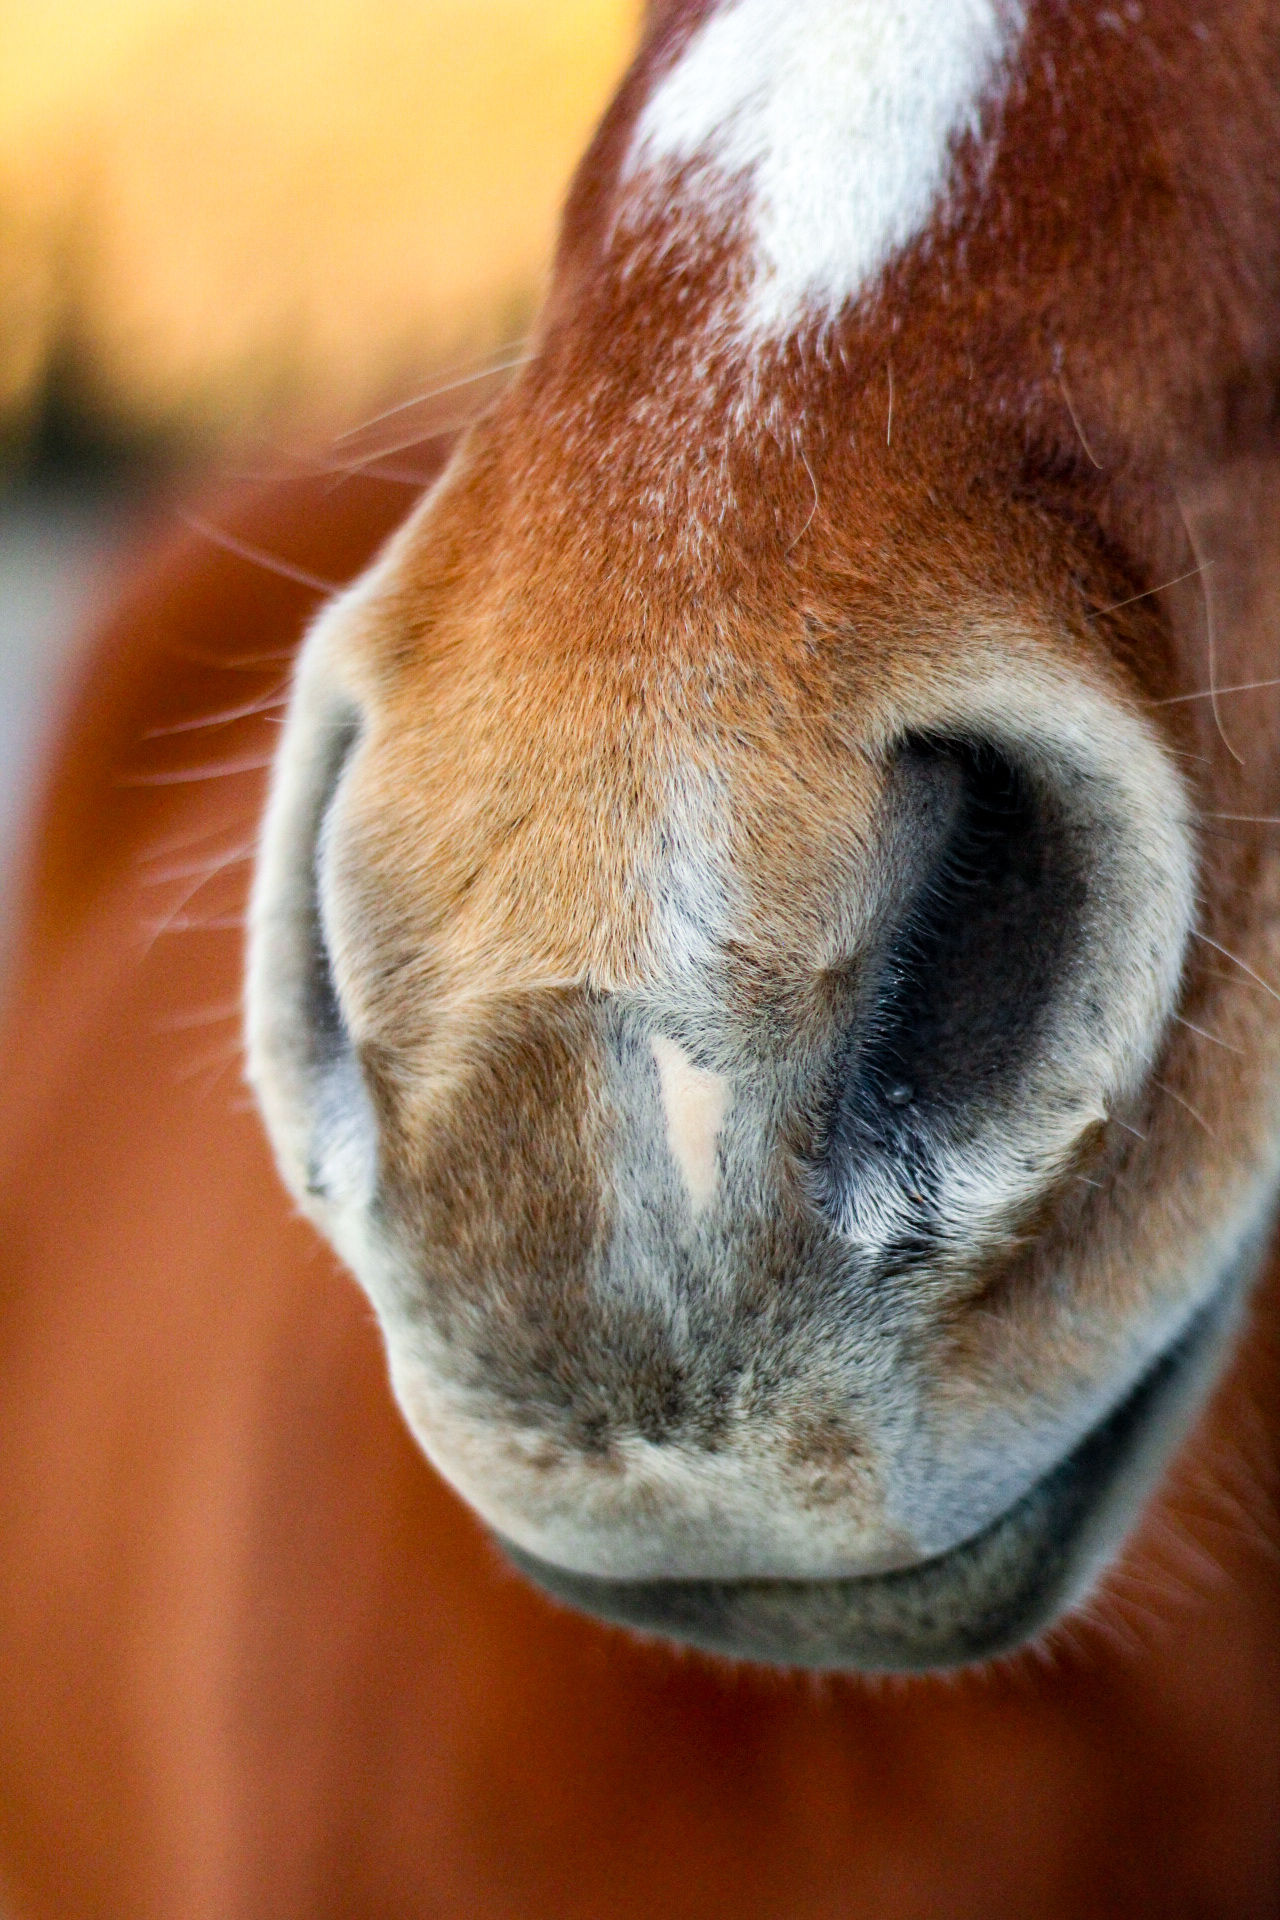 Horse nose Montana